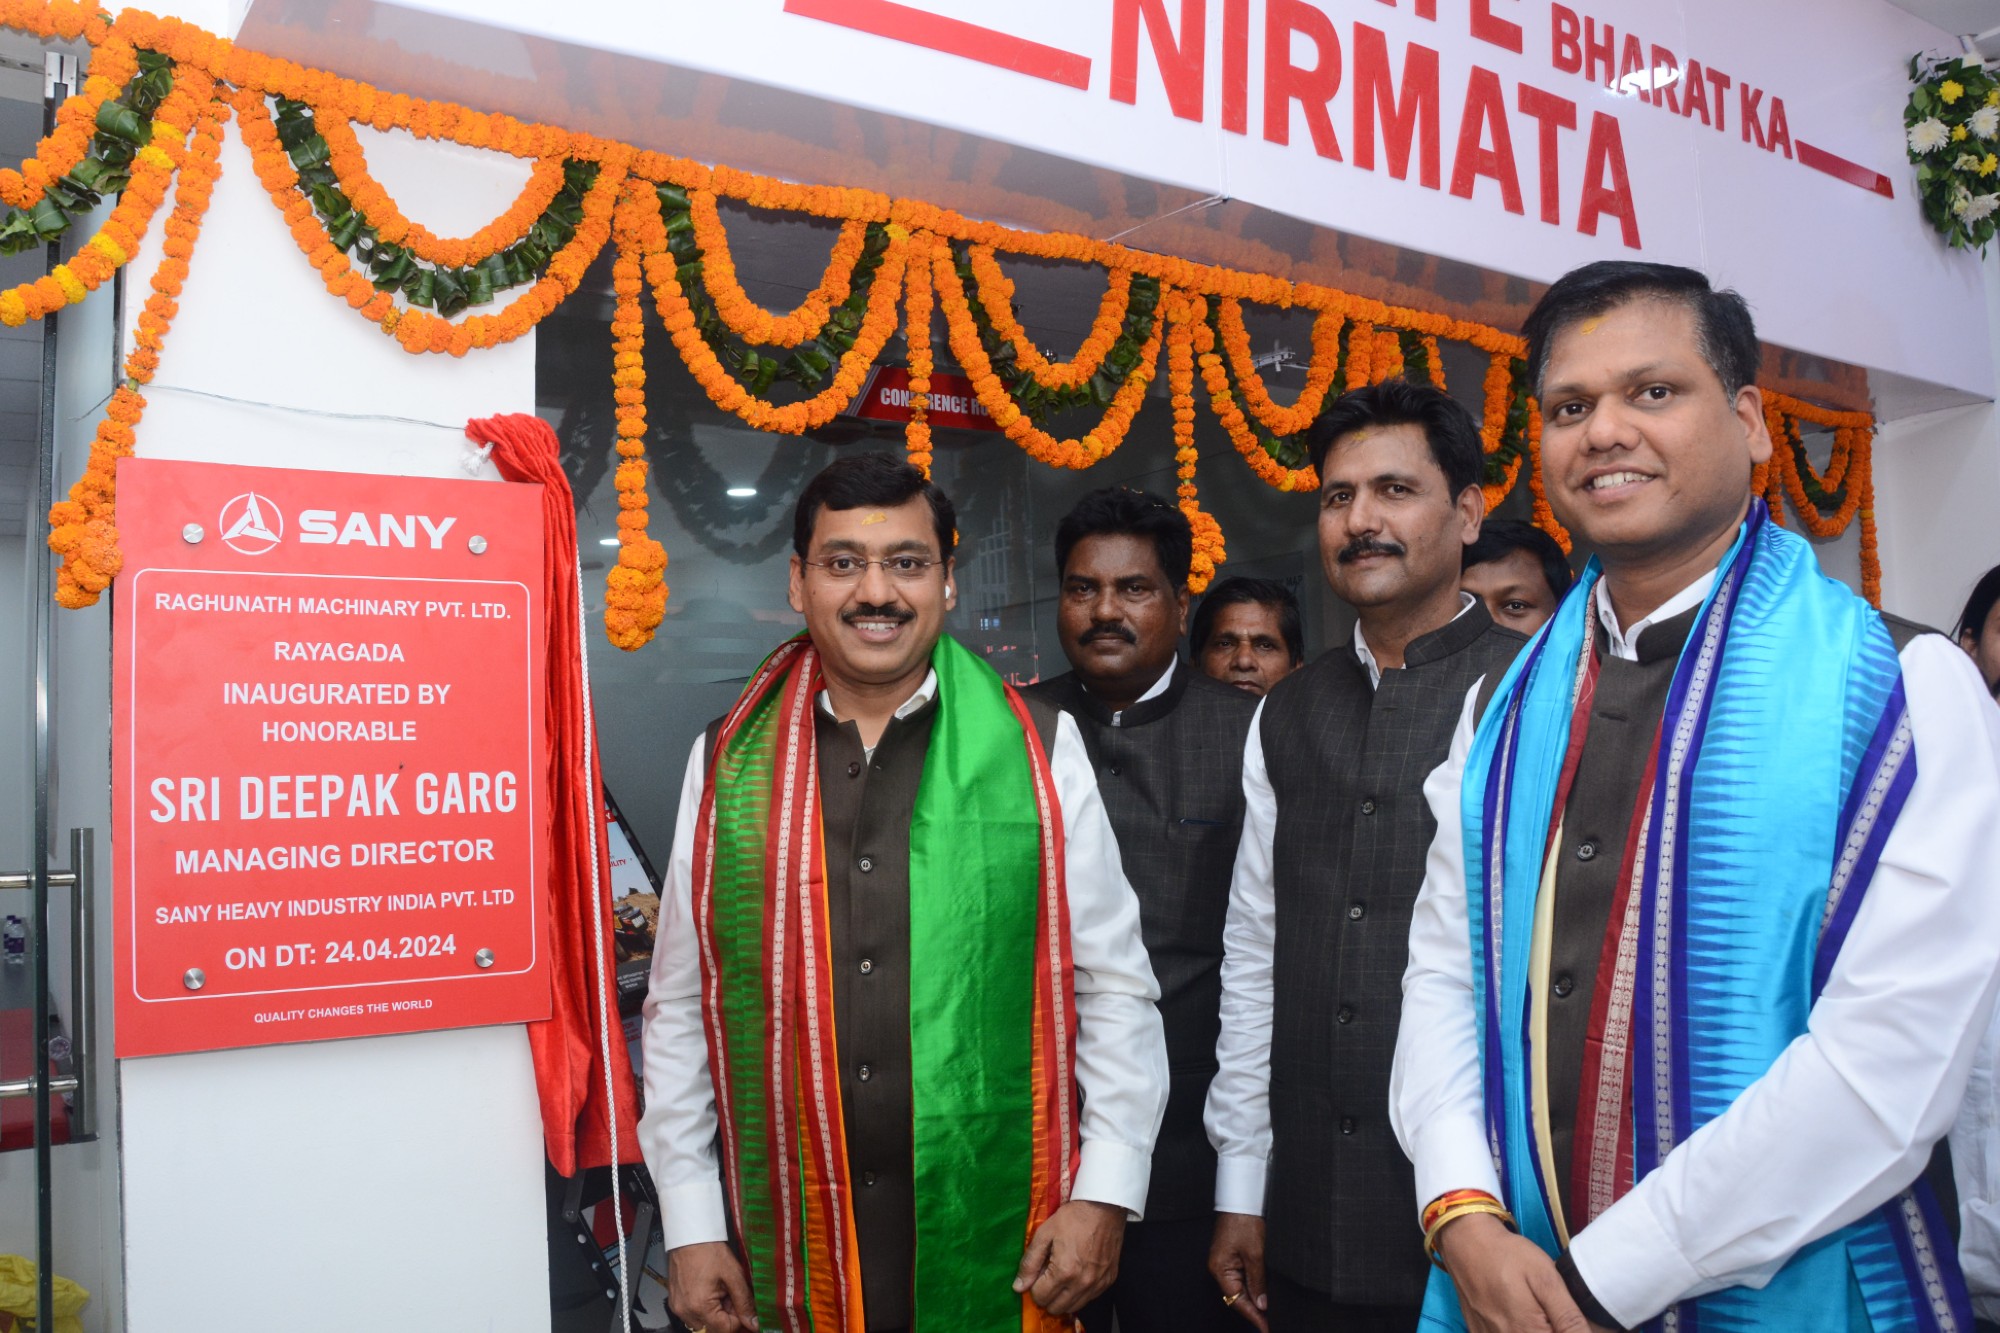 SANY Heavy Industry India Pvt Ltd Expands Presence with Grand Opening of Raghunath Machinery HO in Rayagada, Odisha.